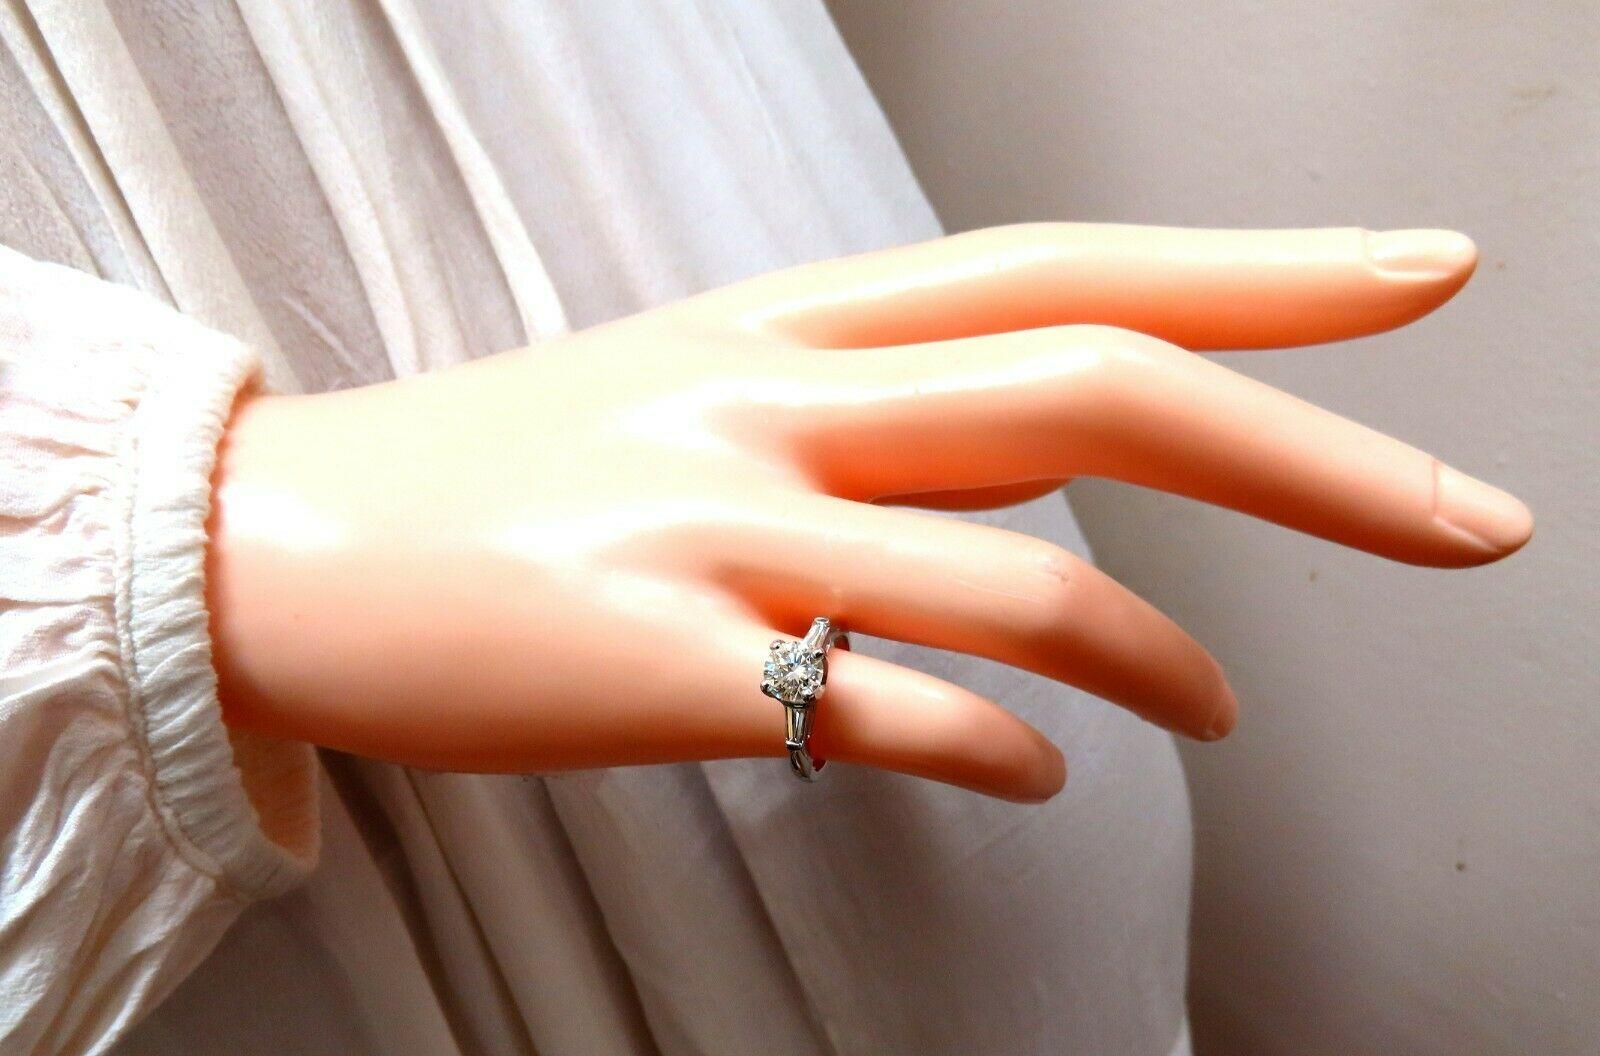 Classic Three Engagement ring

1.01ct. Natural Center Round Brilliant diamond.

Round Full Cut Brilliant

L-color Vs-1 clarity 

6.29 x 6.39 x 4.02mm

GIA Report # 2185225327

 

 .36ct (2) Side baguette diamonds.

H-color Vs-2